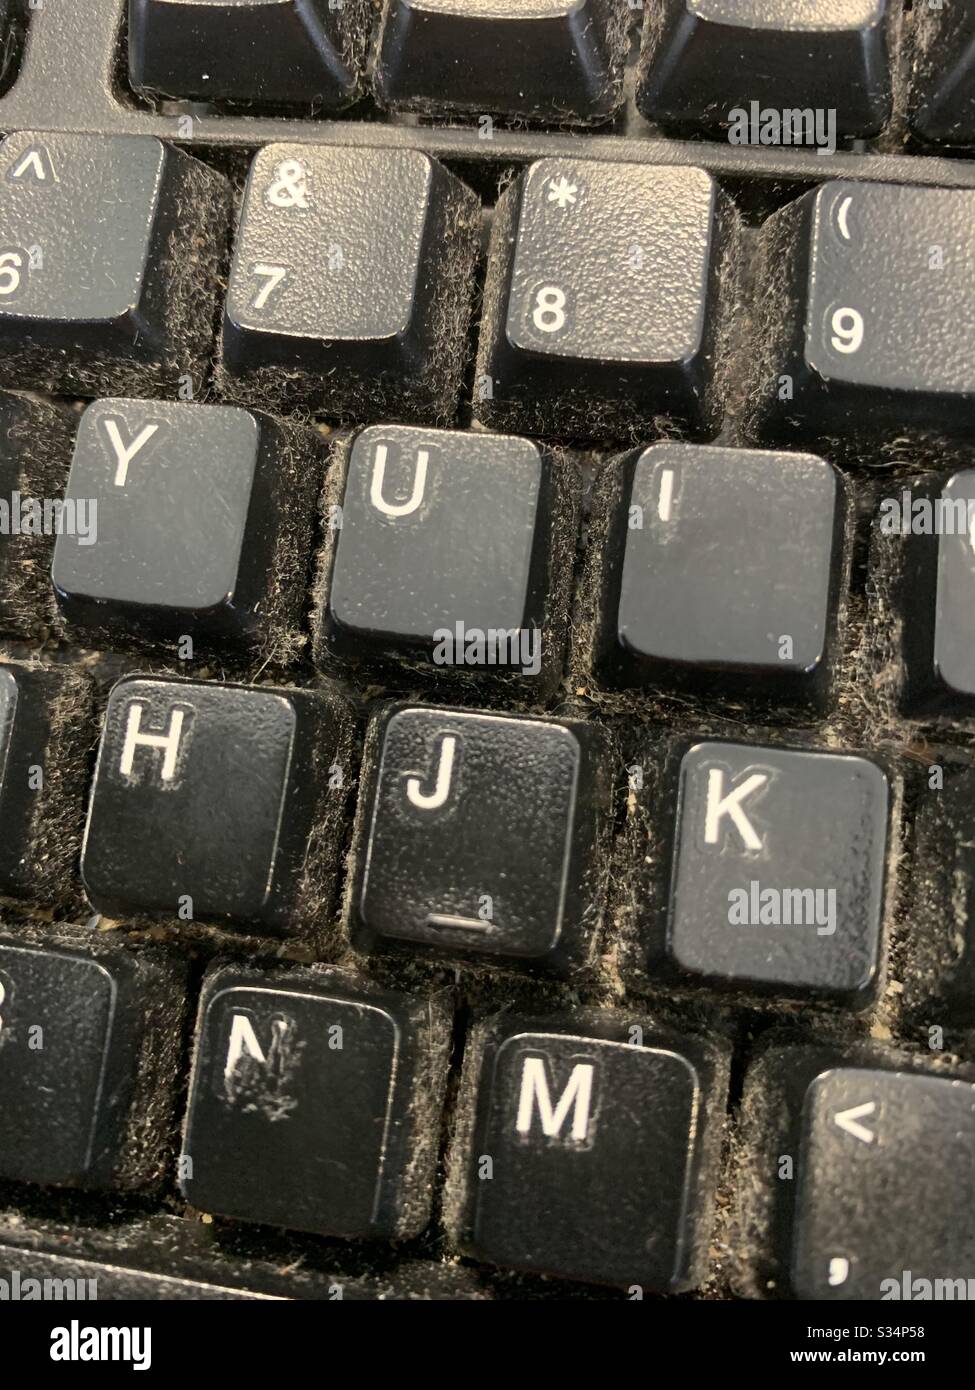 Dirty computer keyboard Stock Photo